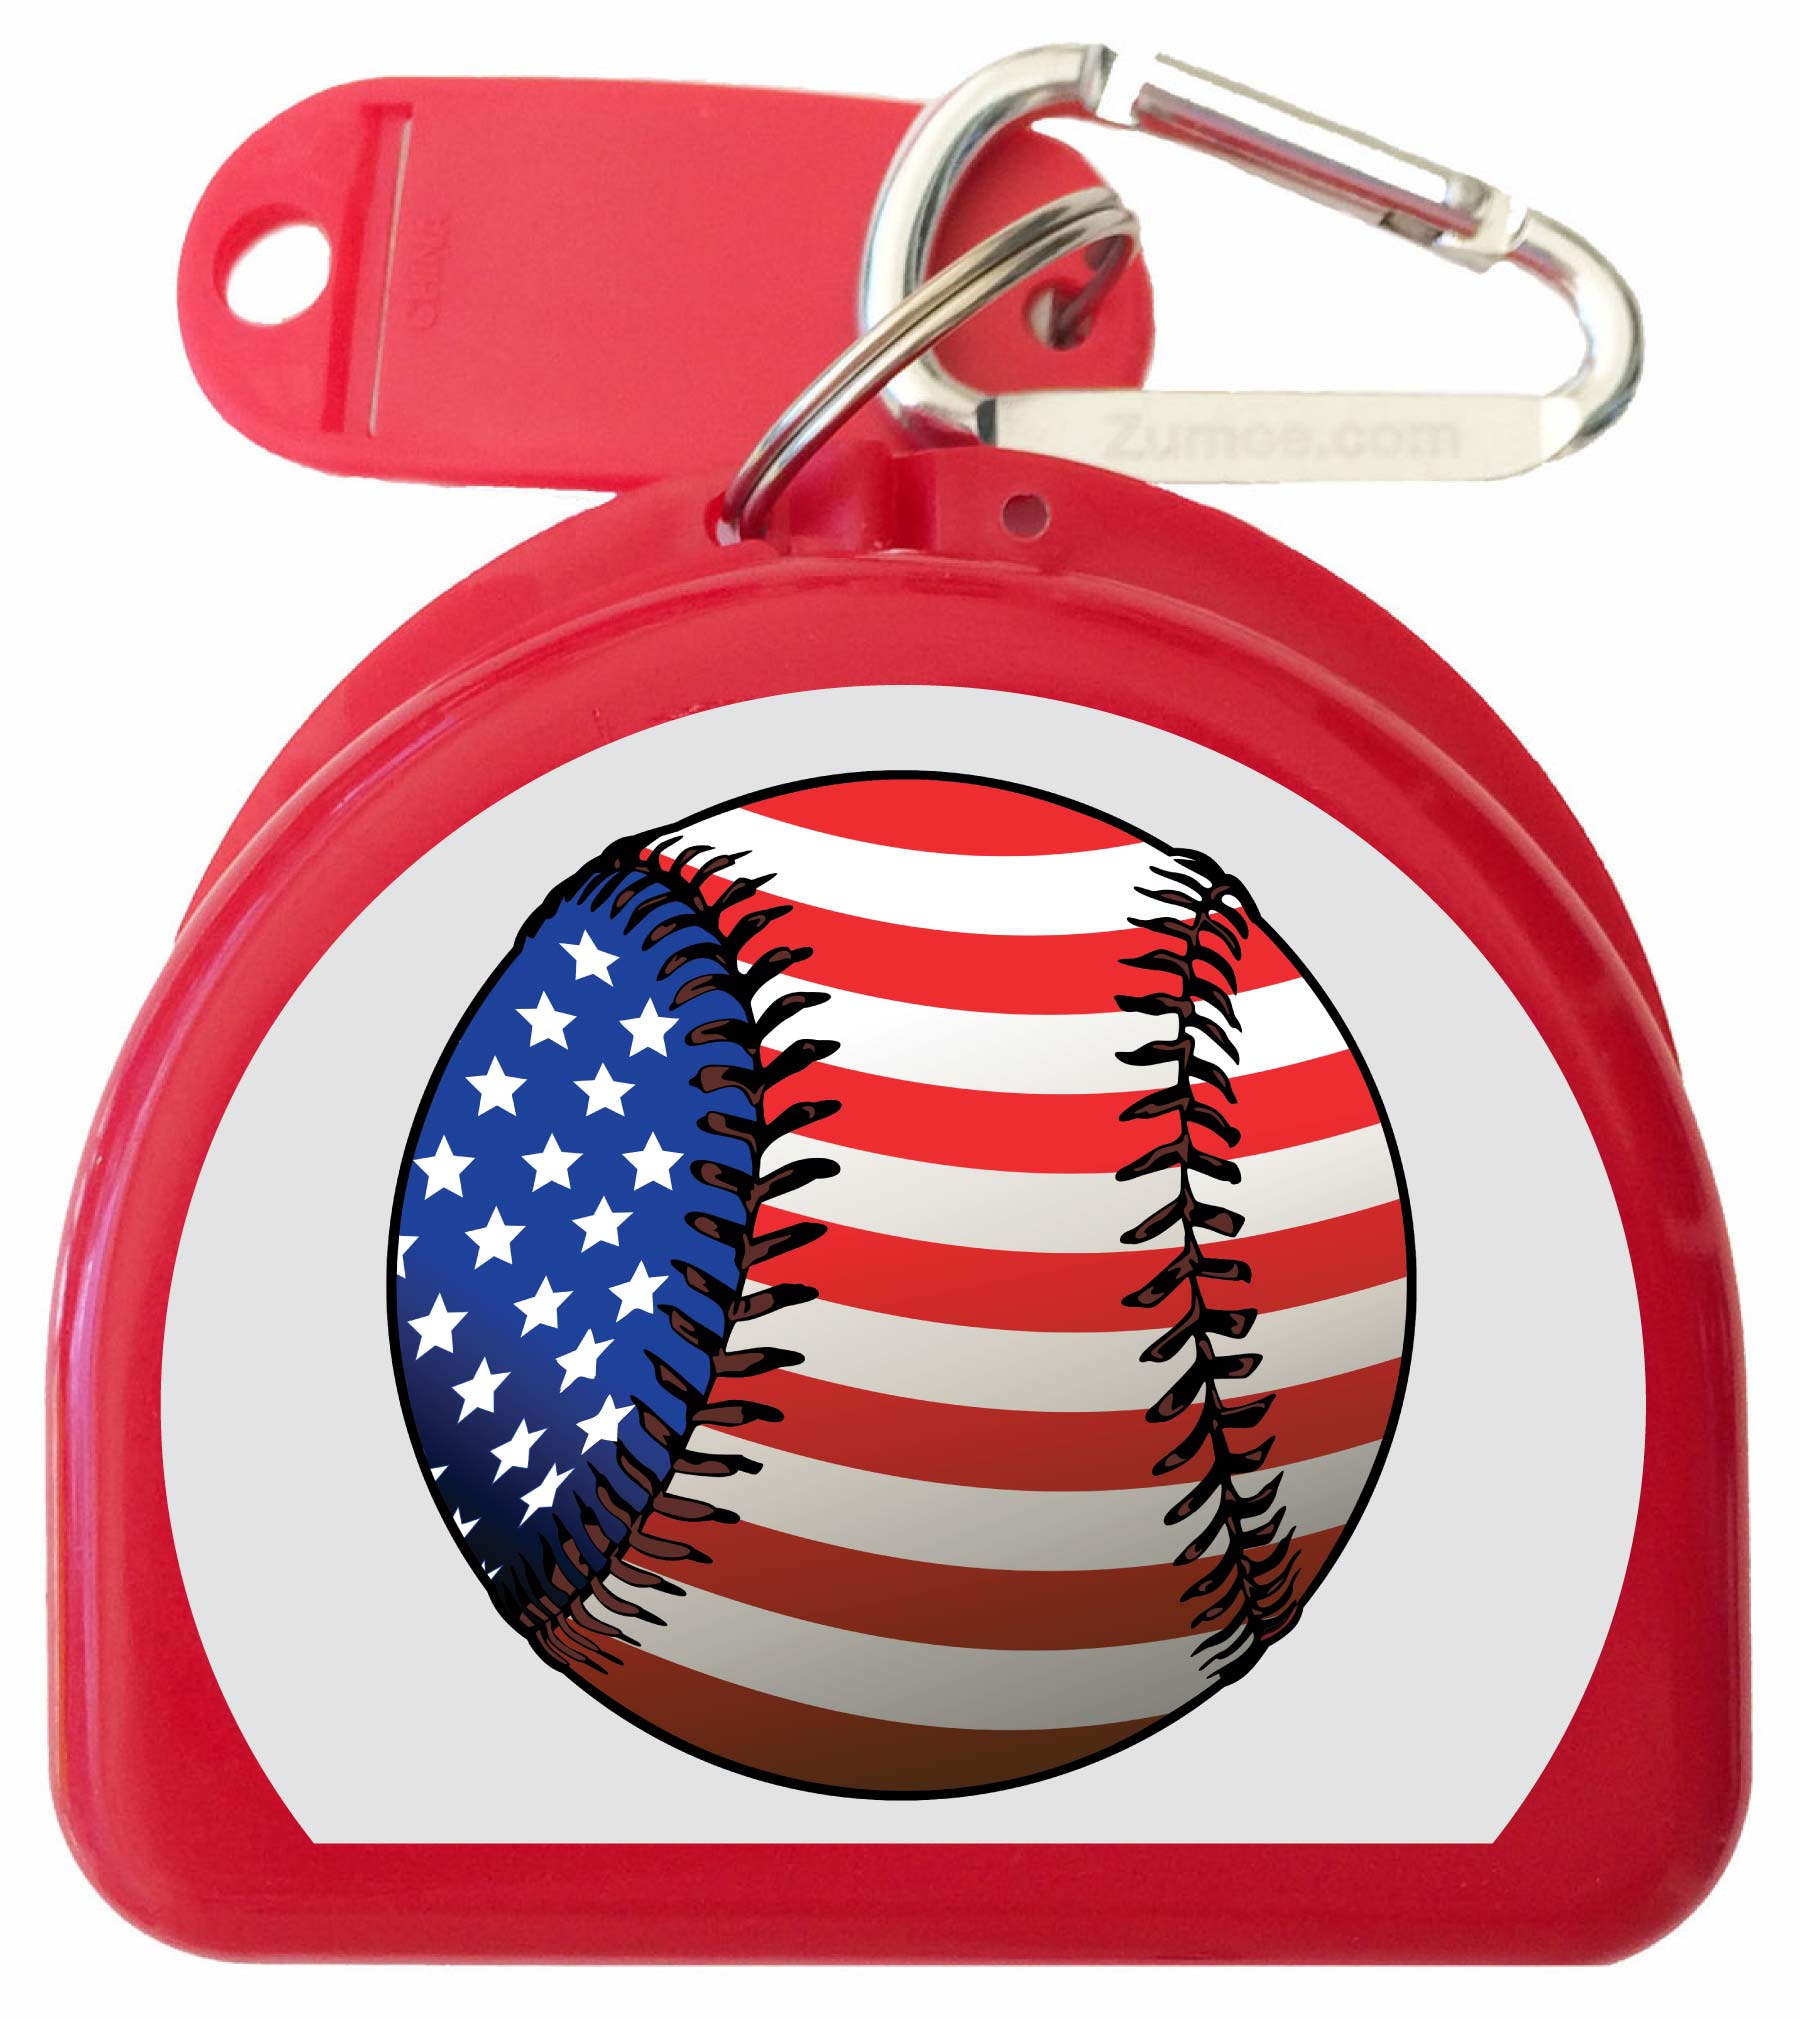 671-R - Retainer Case - American Baseball